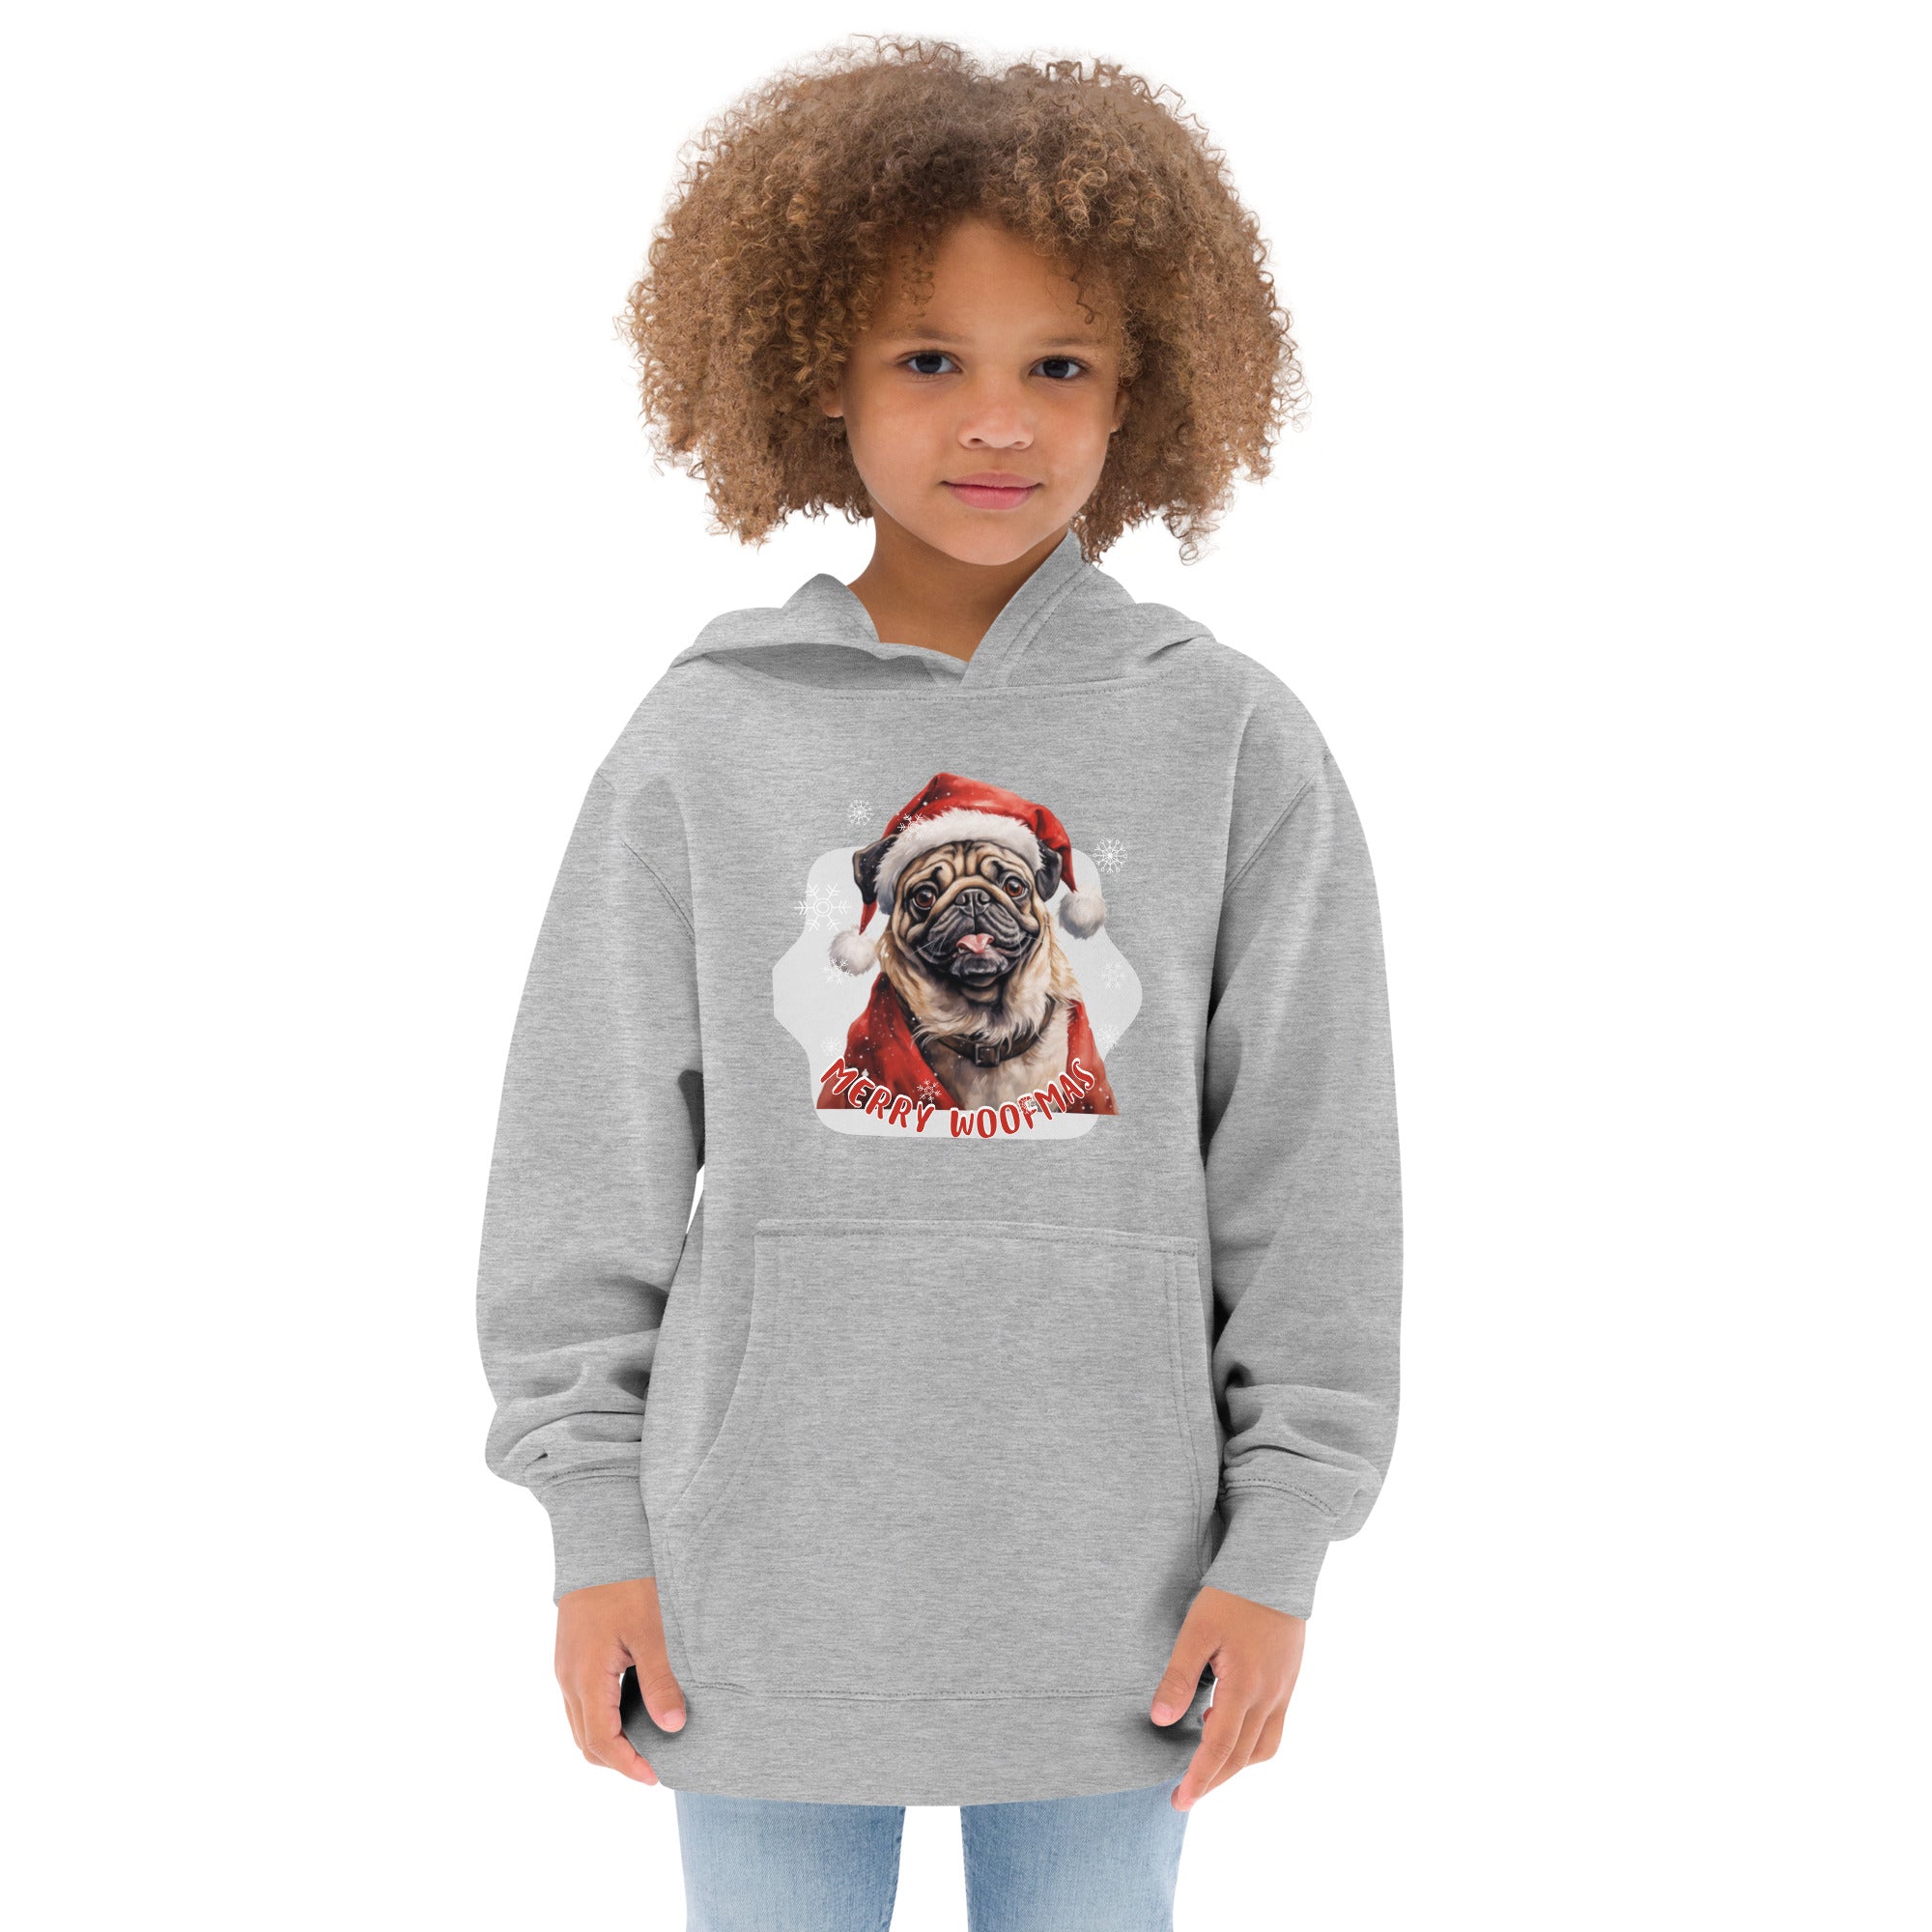 Kids fleece hoodie Pug - Merry Woofmas